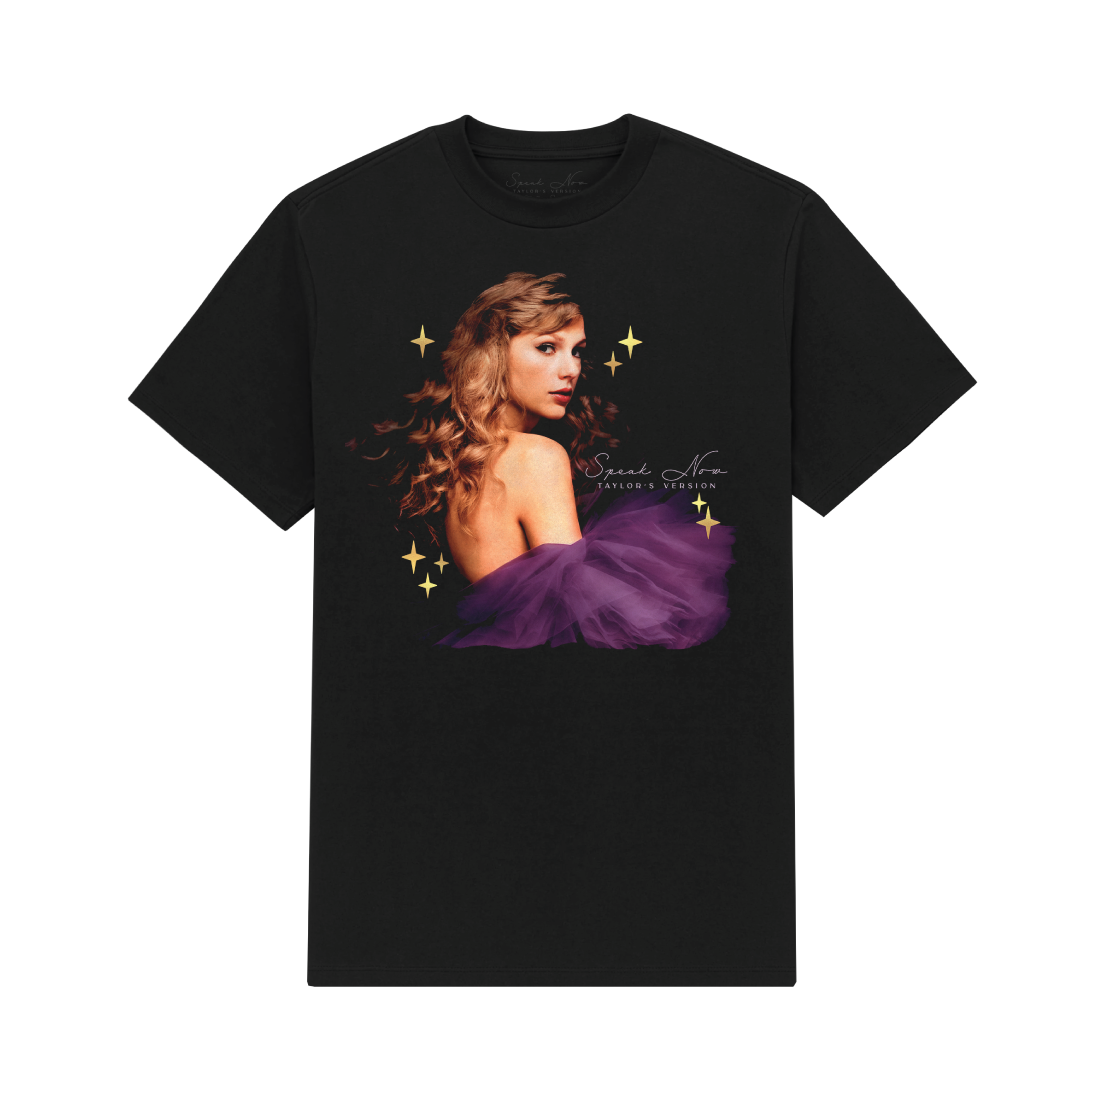 Taylor Swift - Speak Now (Taylor's Version) Black T-Shirt